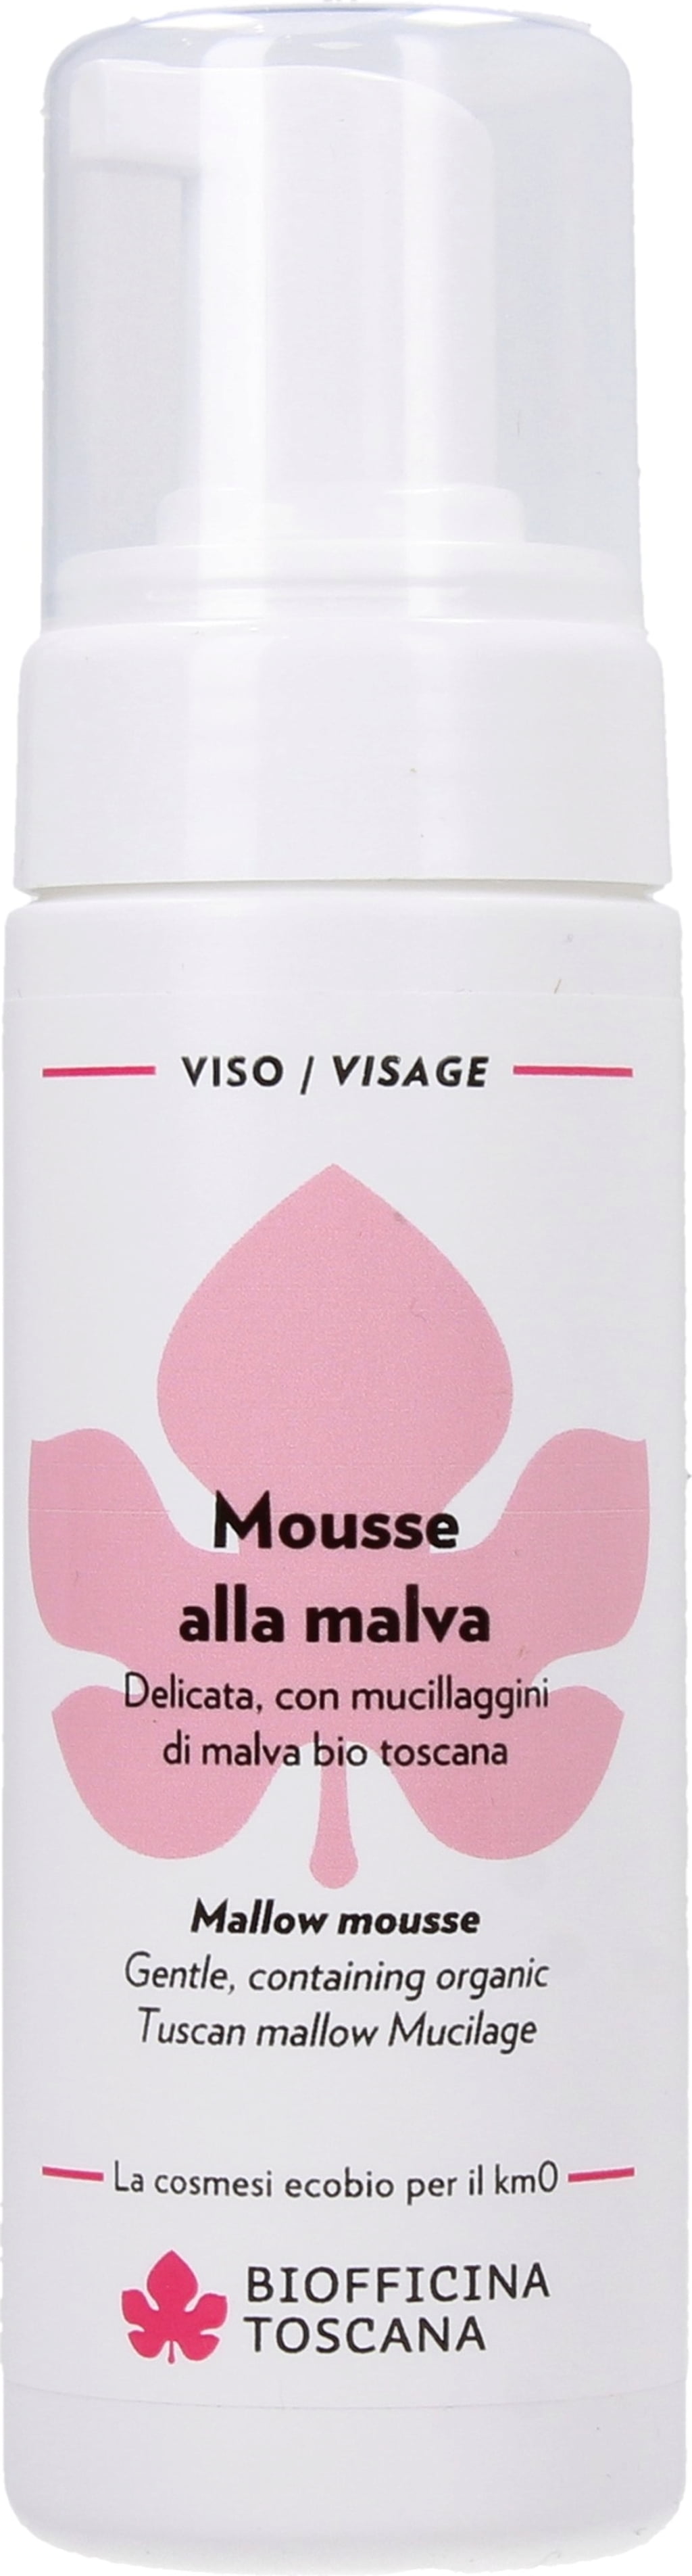 Biofficina Toscana Mousse Detergente alla Malva - 150 ml